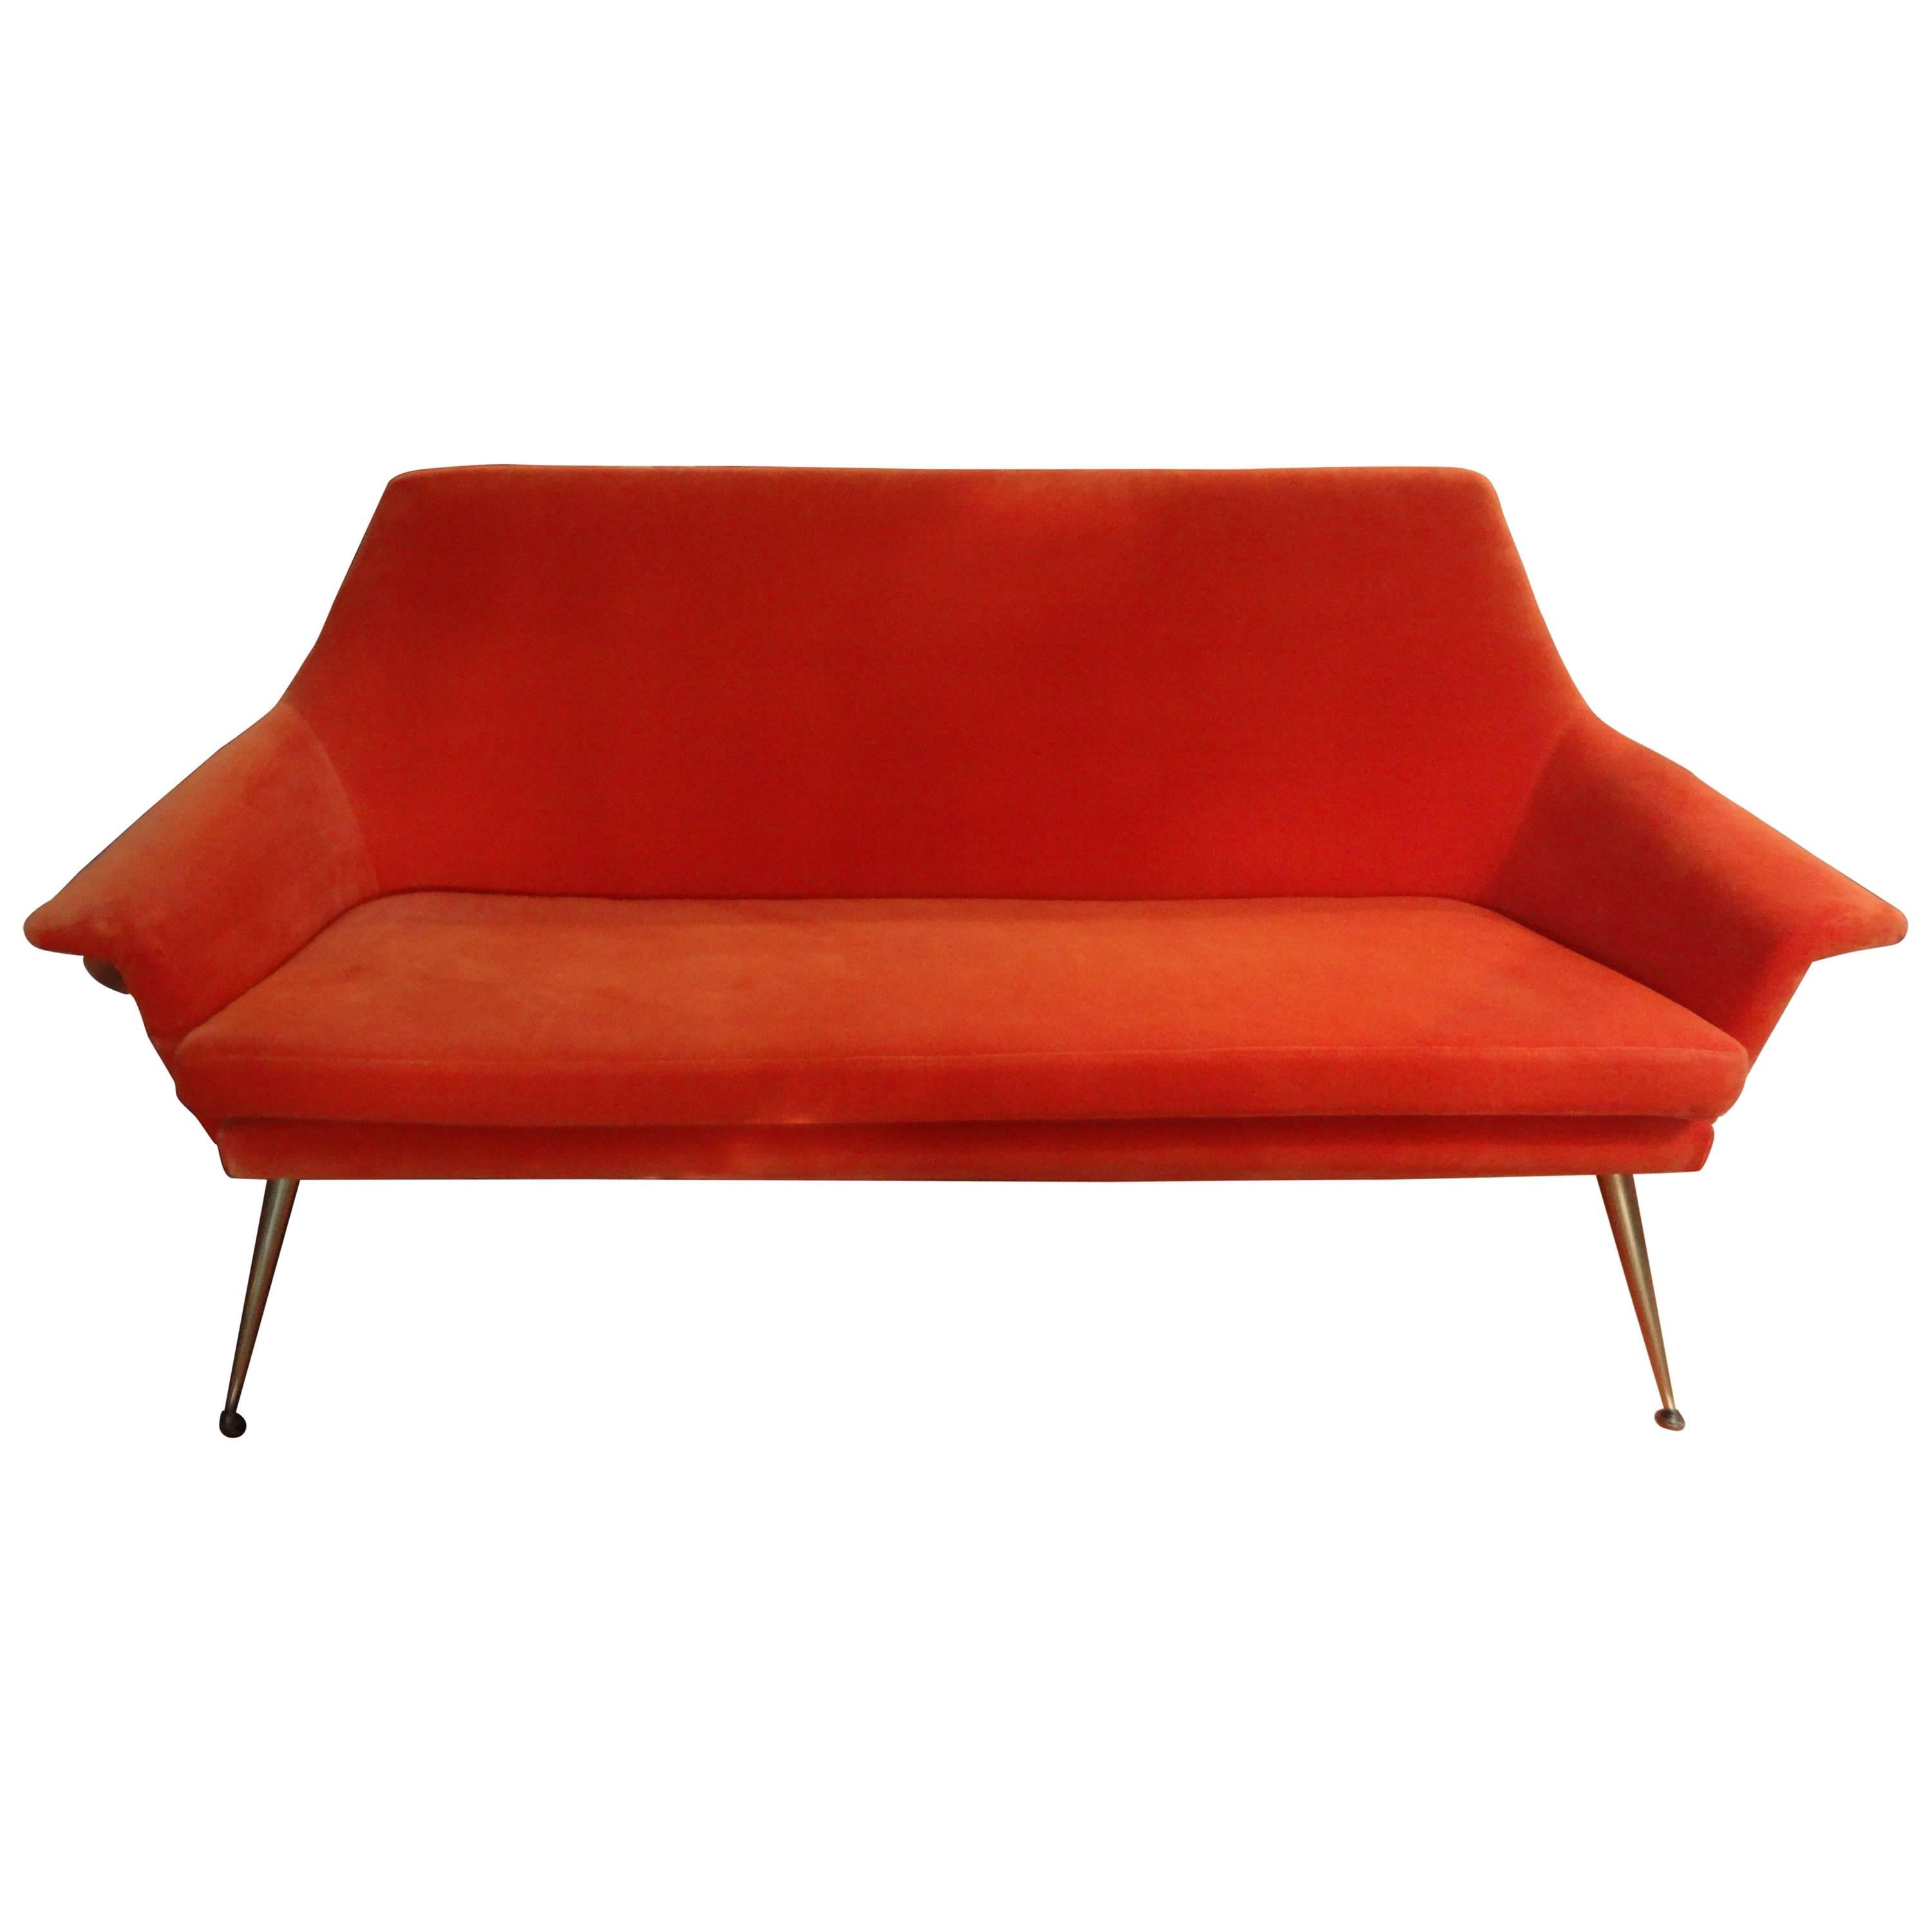 Italian Mid Century Gio Ponti Inspired Sofa with Brass Legs